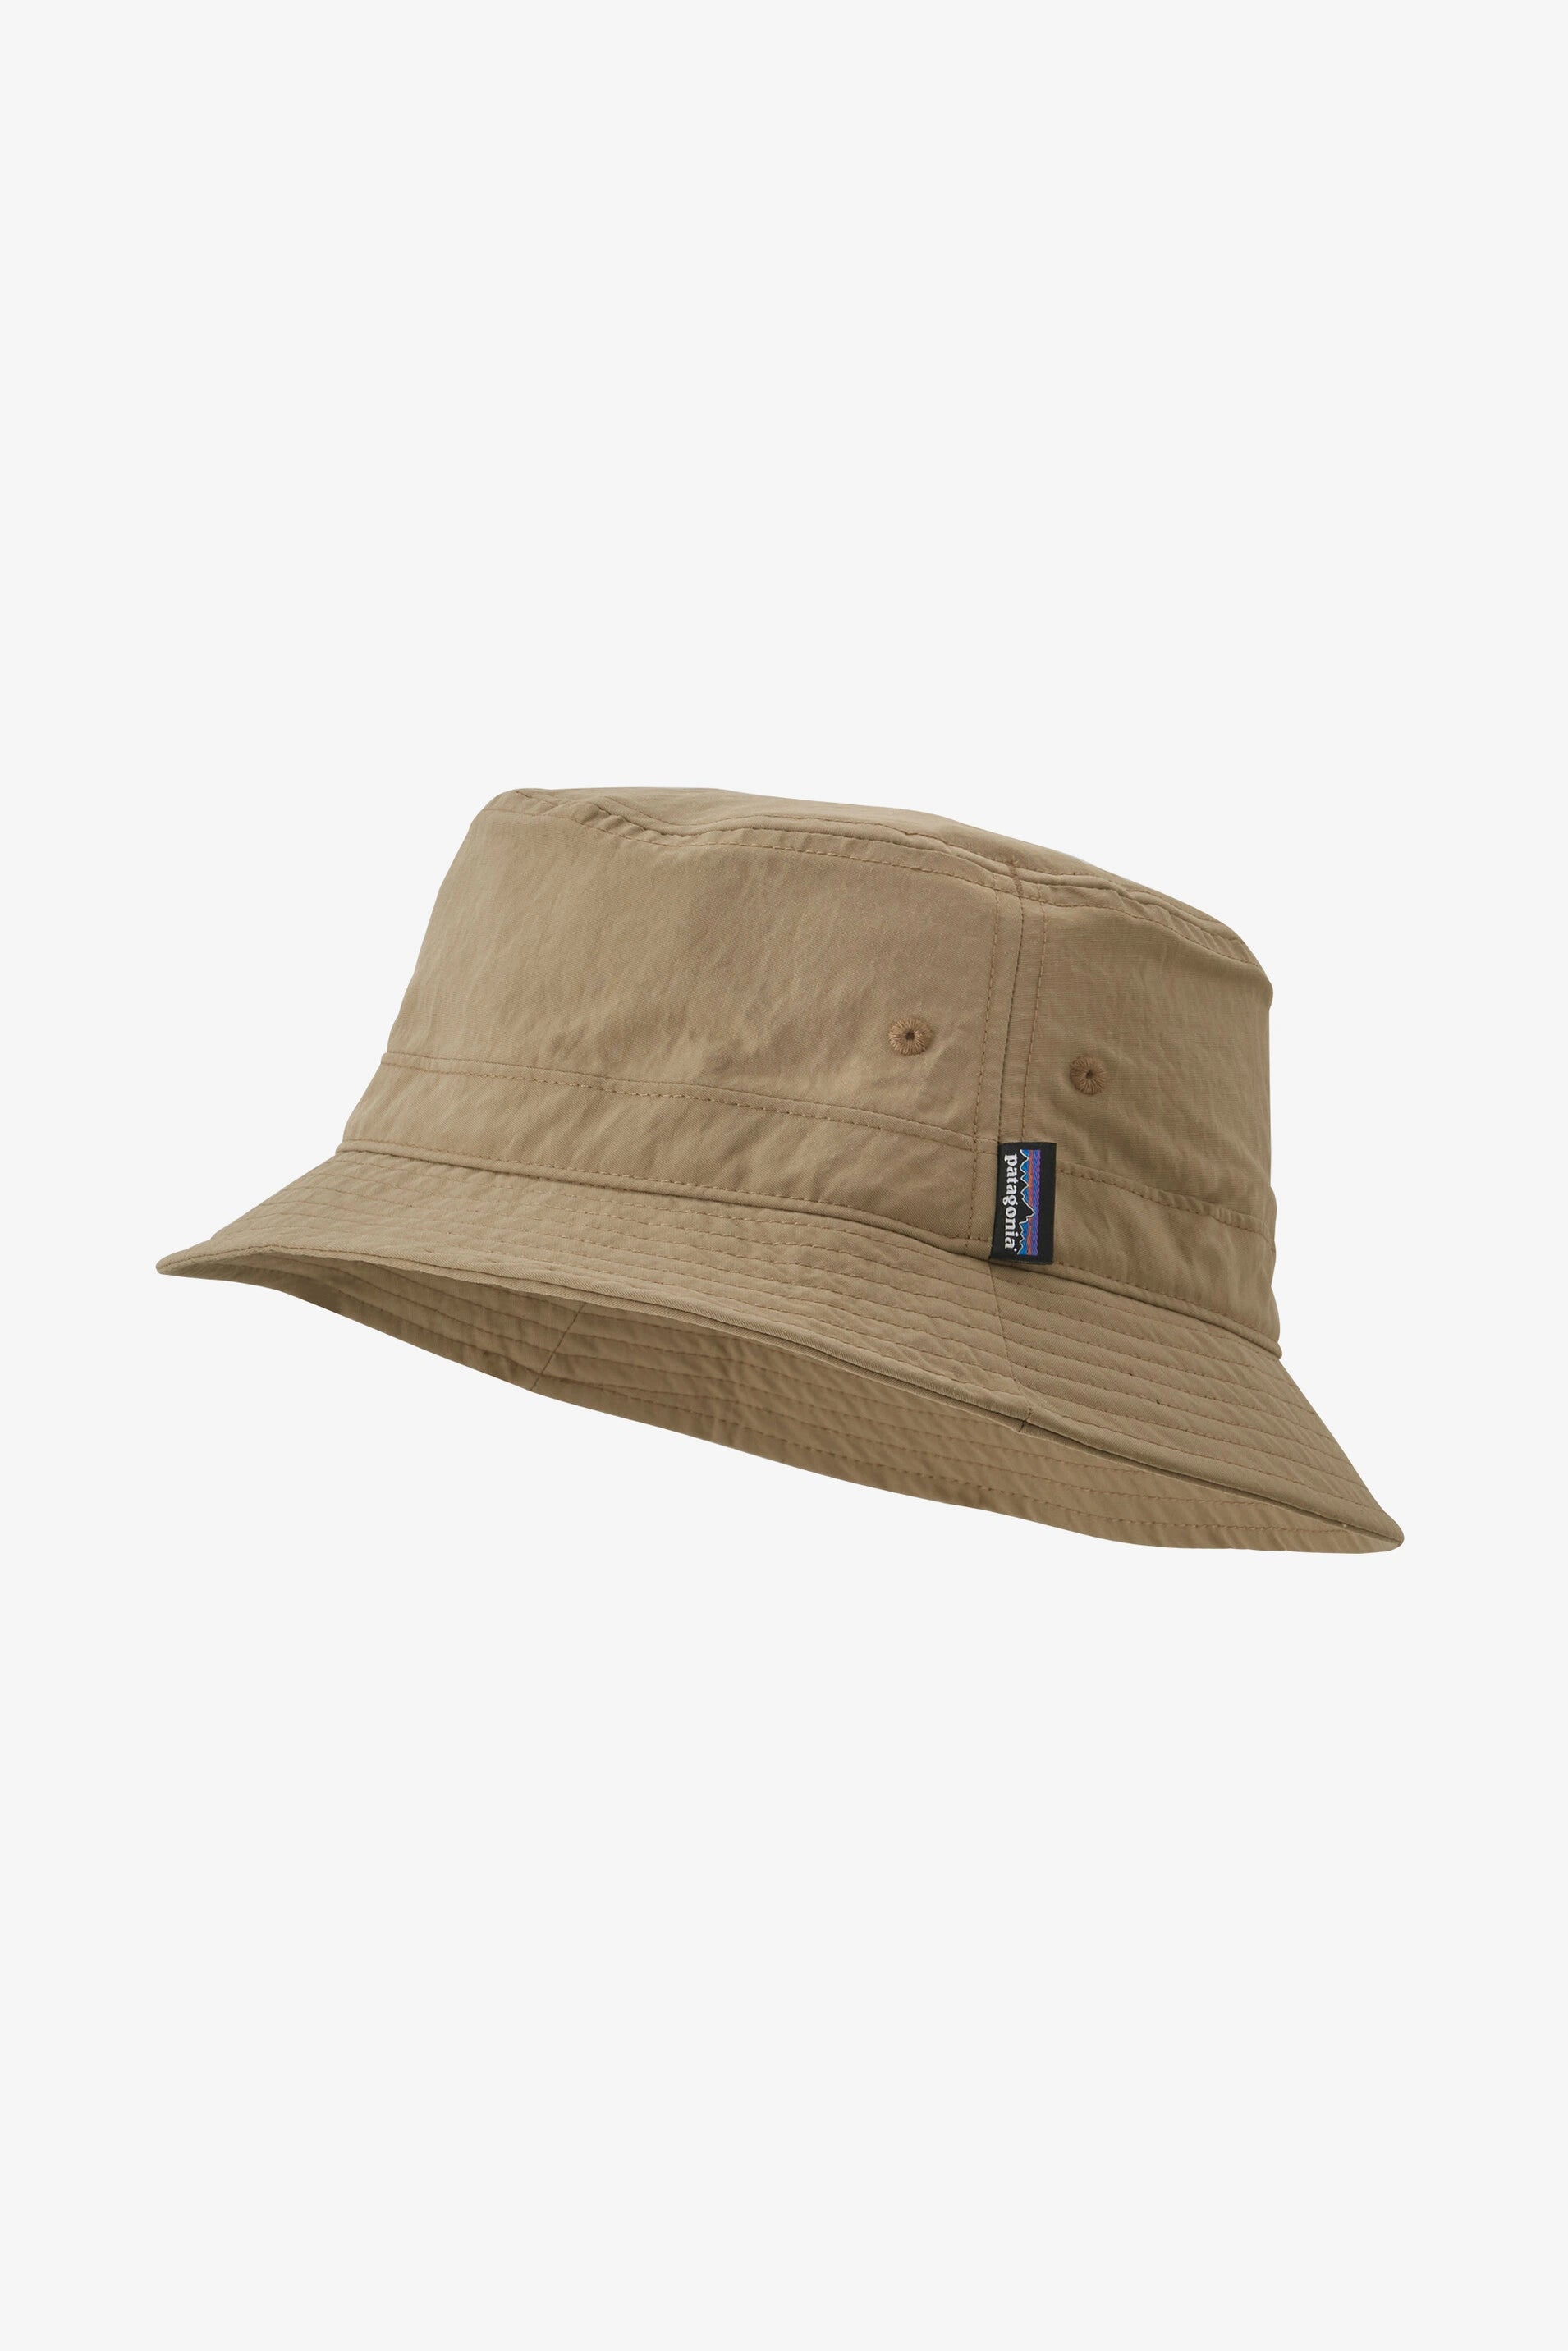 Wavefarer™ Bucket Hat Hats Patagonia   